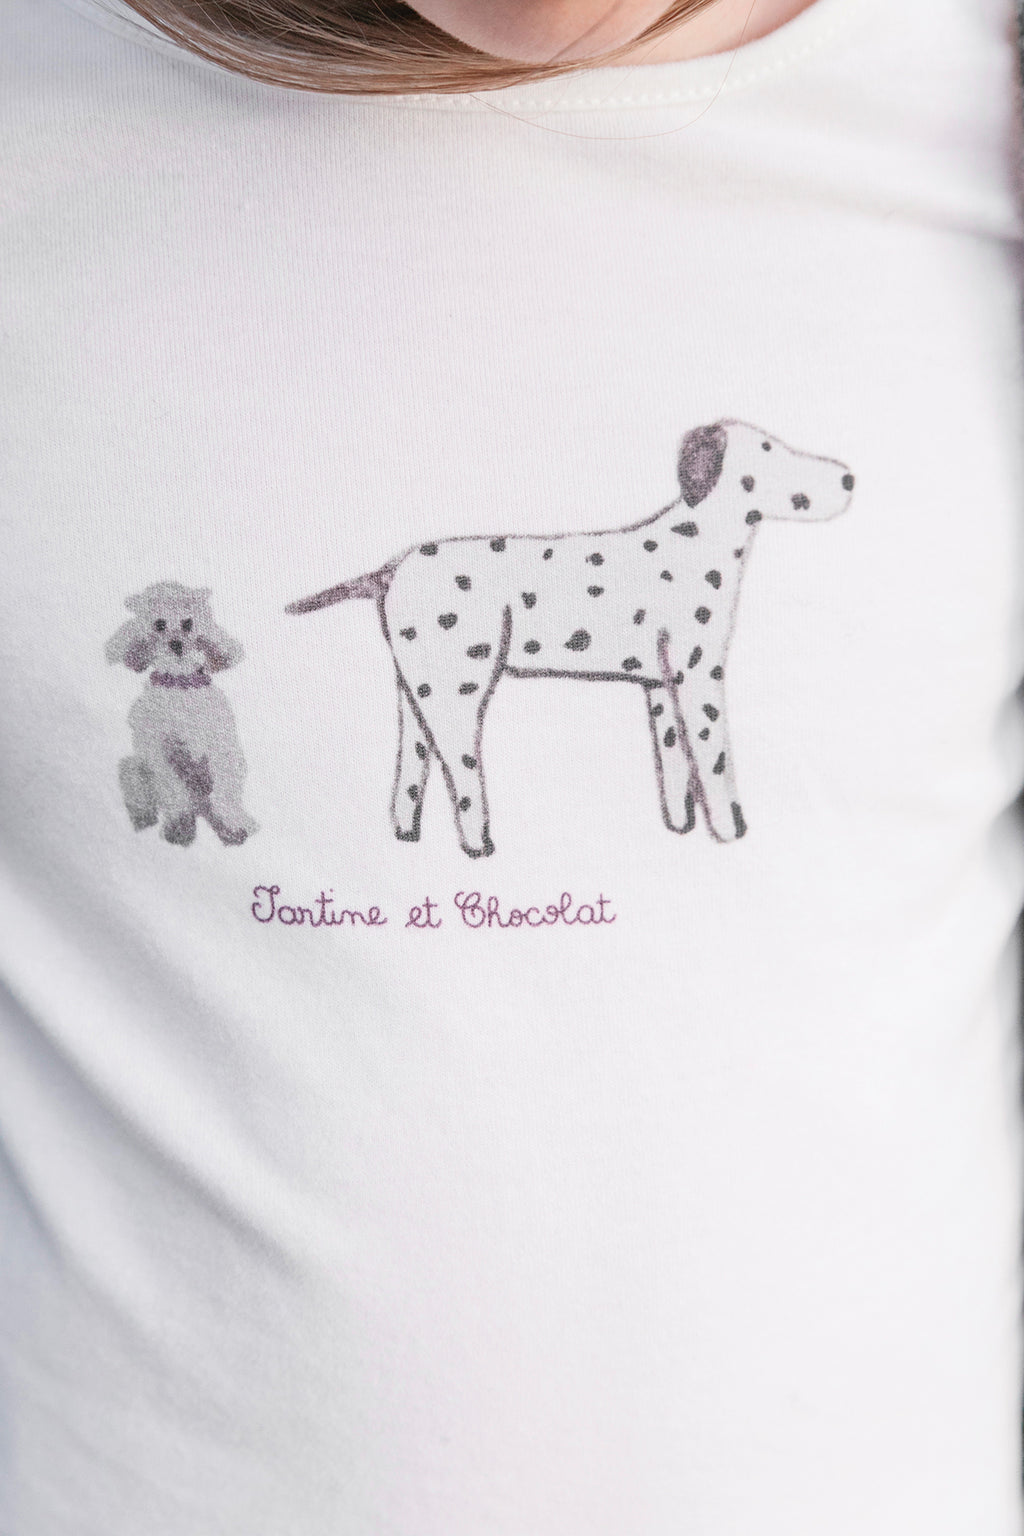 T-shirt - Illustration eggplant dogs